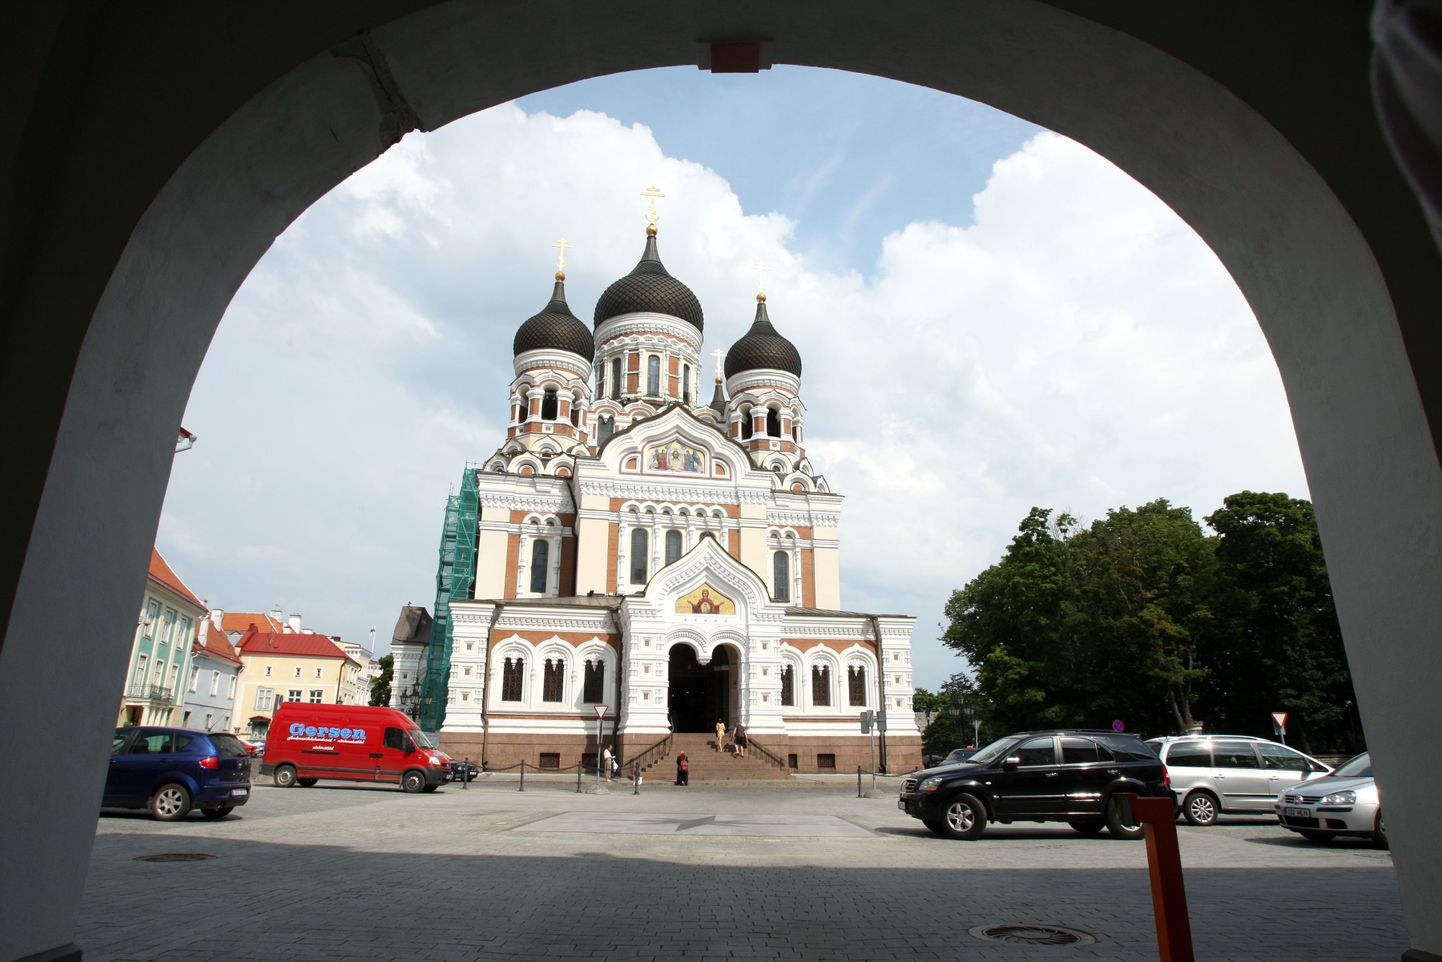 Aleksander Nevski katedraal